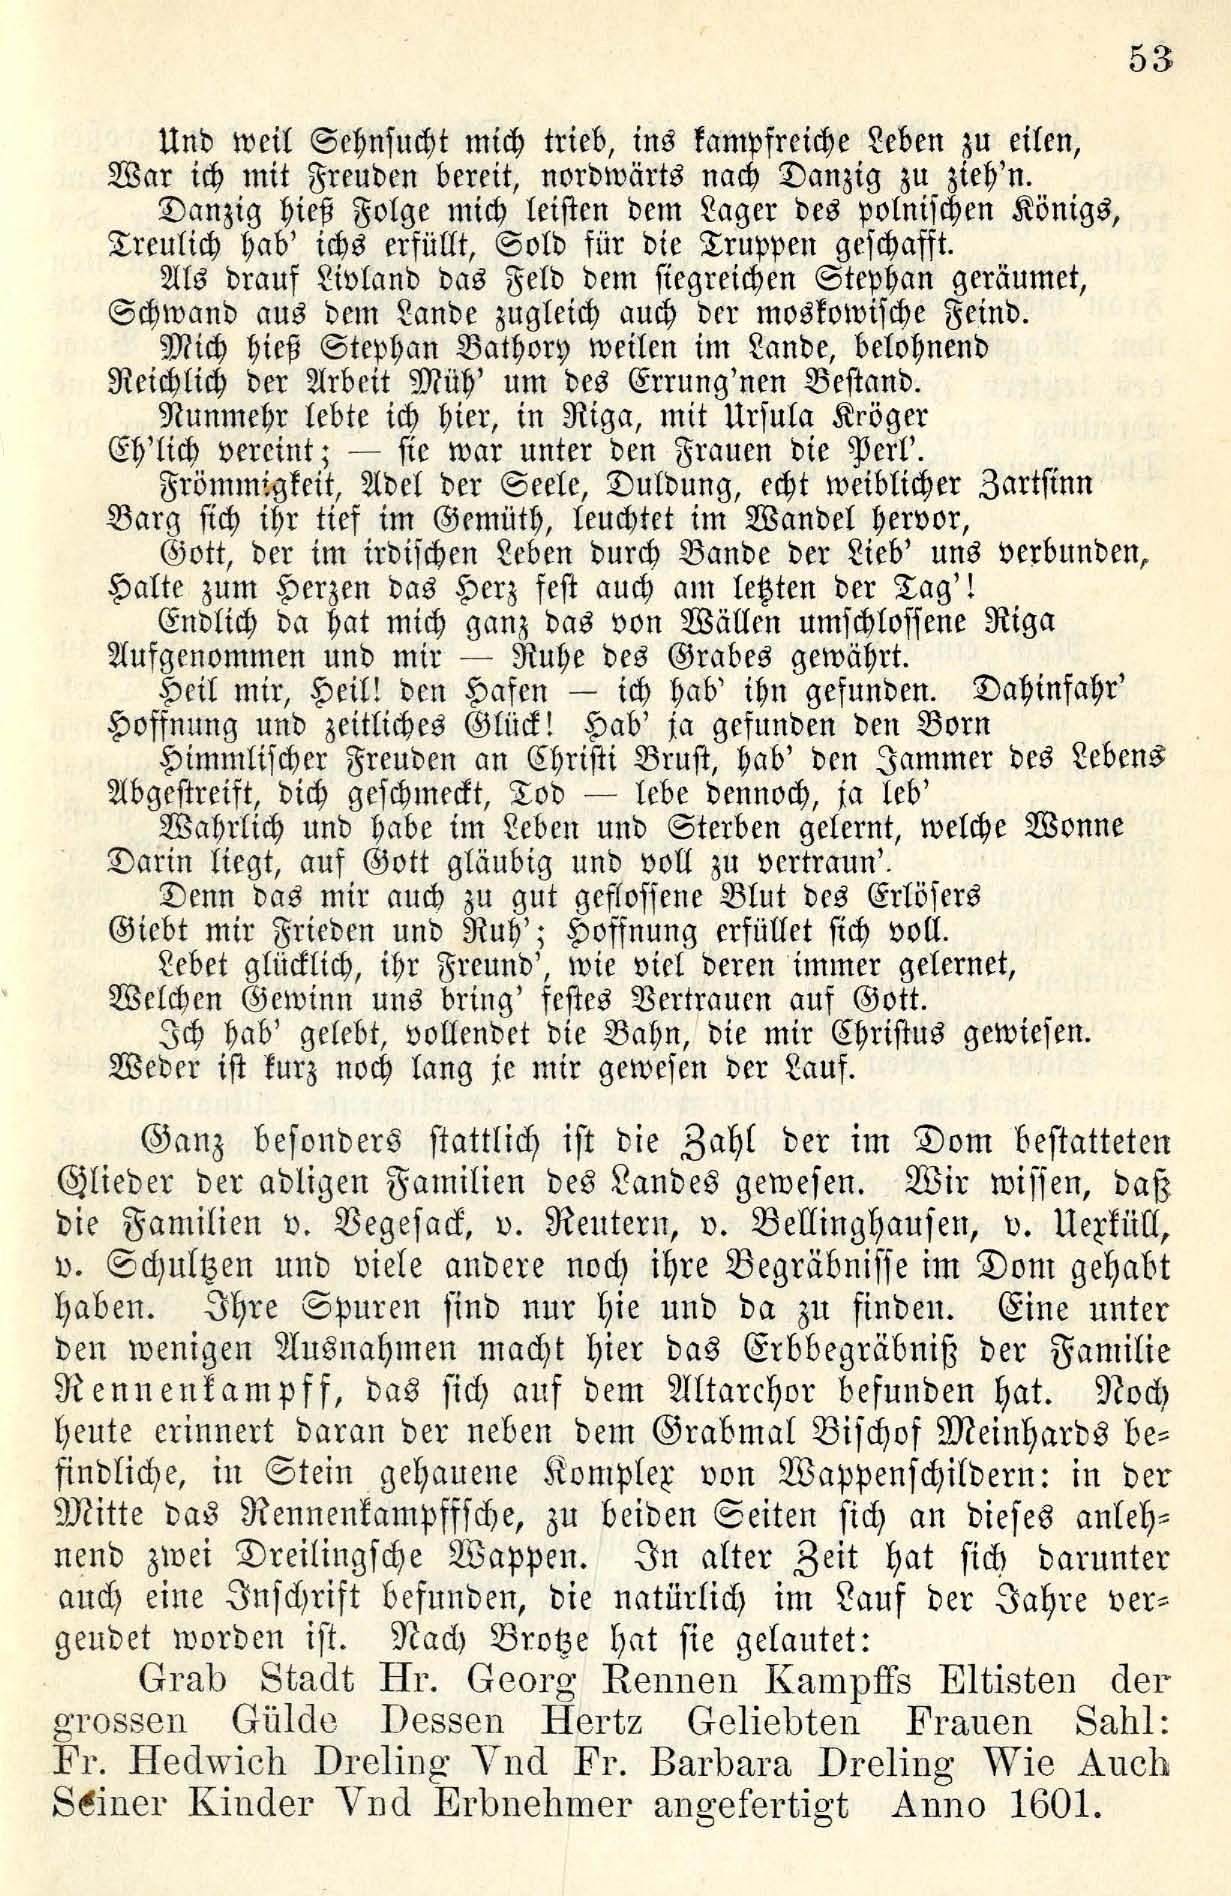 Denkmäler im Dom zu Riga (1885) | 54. Main body of text